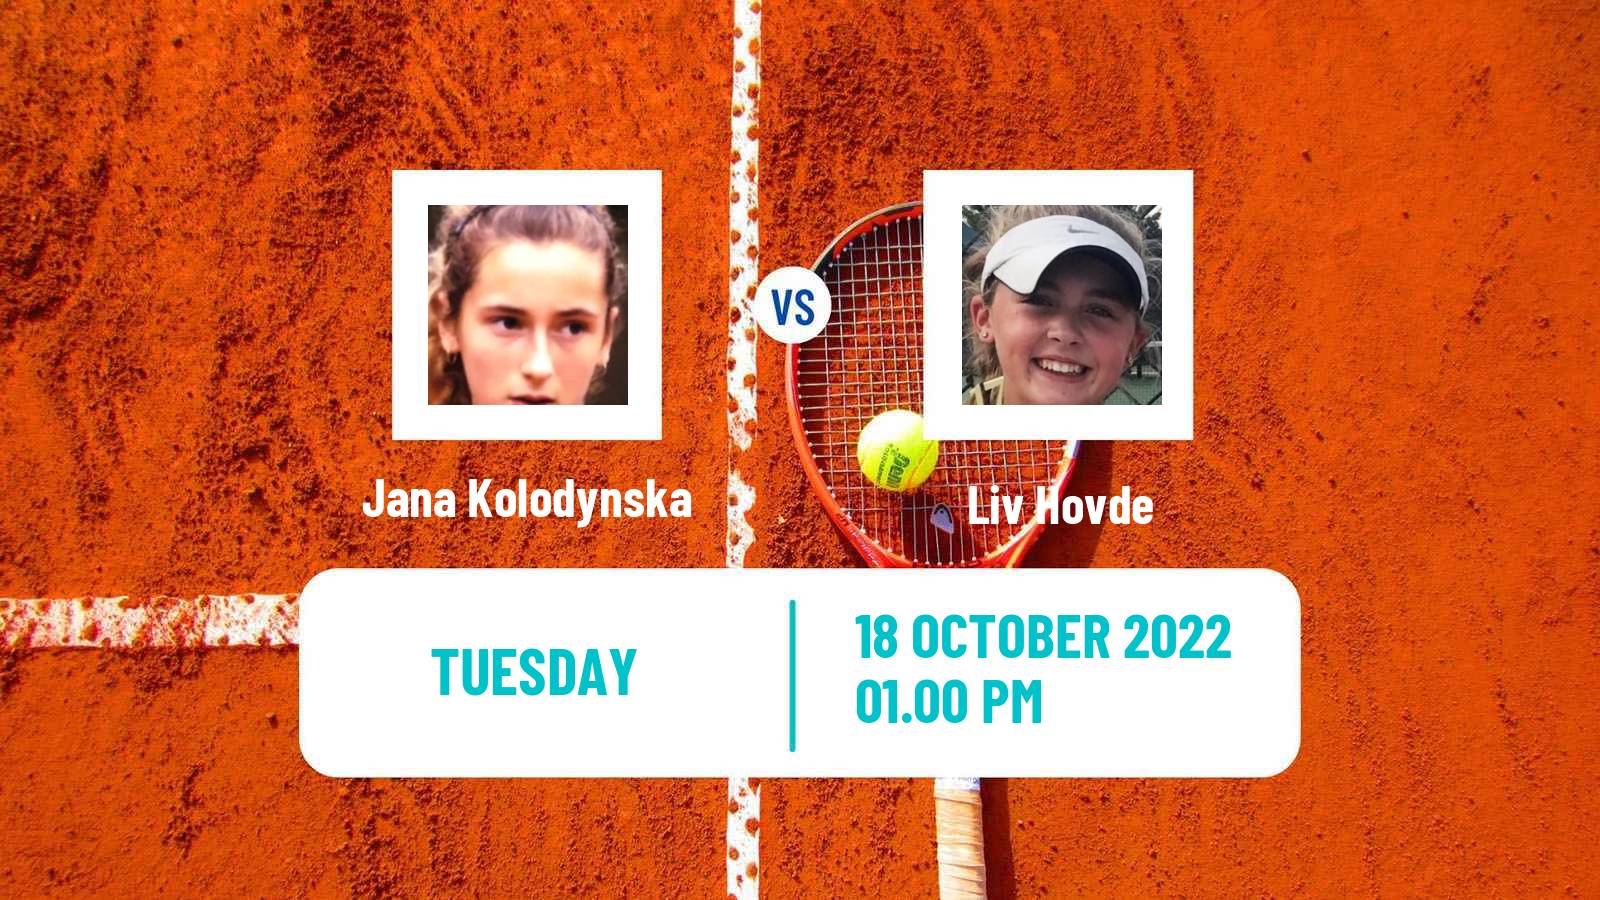 Tennis ITF Tournaments Jana Kolodynska - Liv Hovde